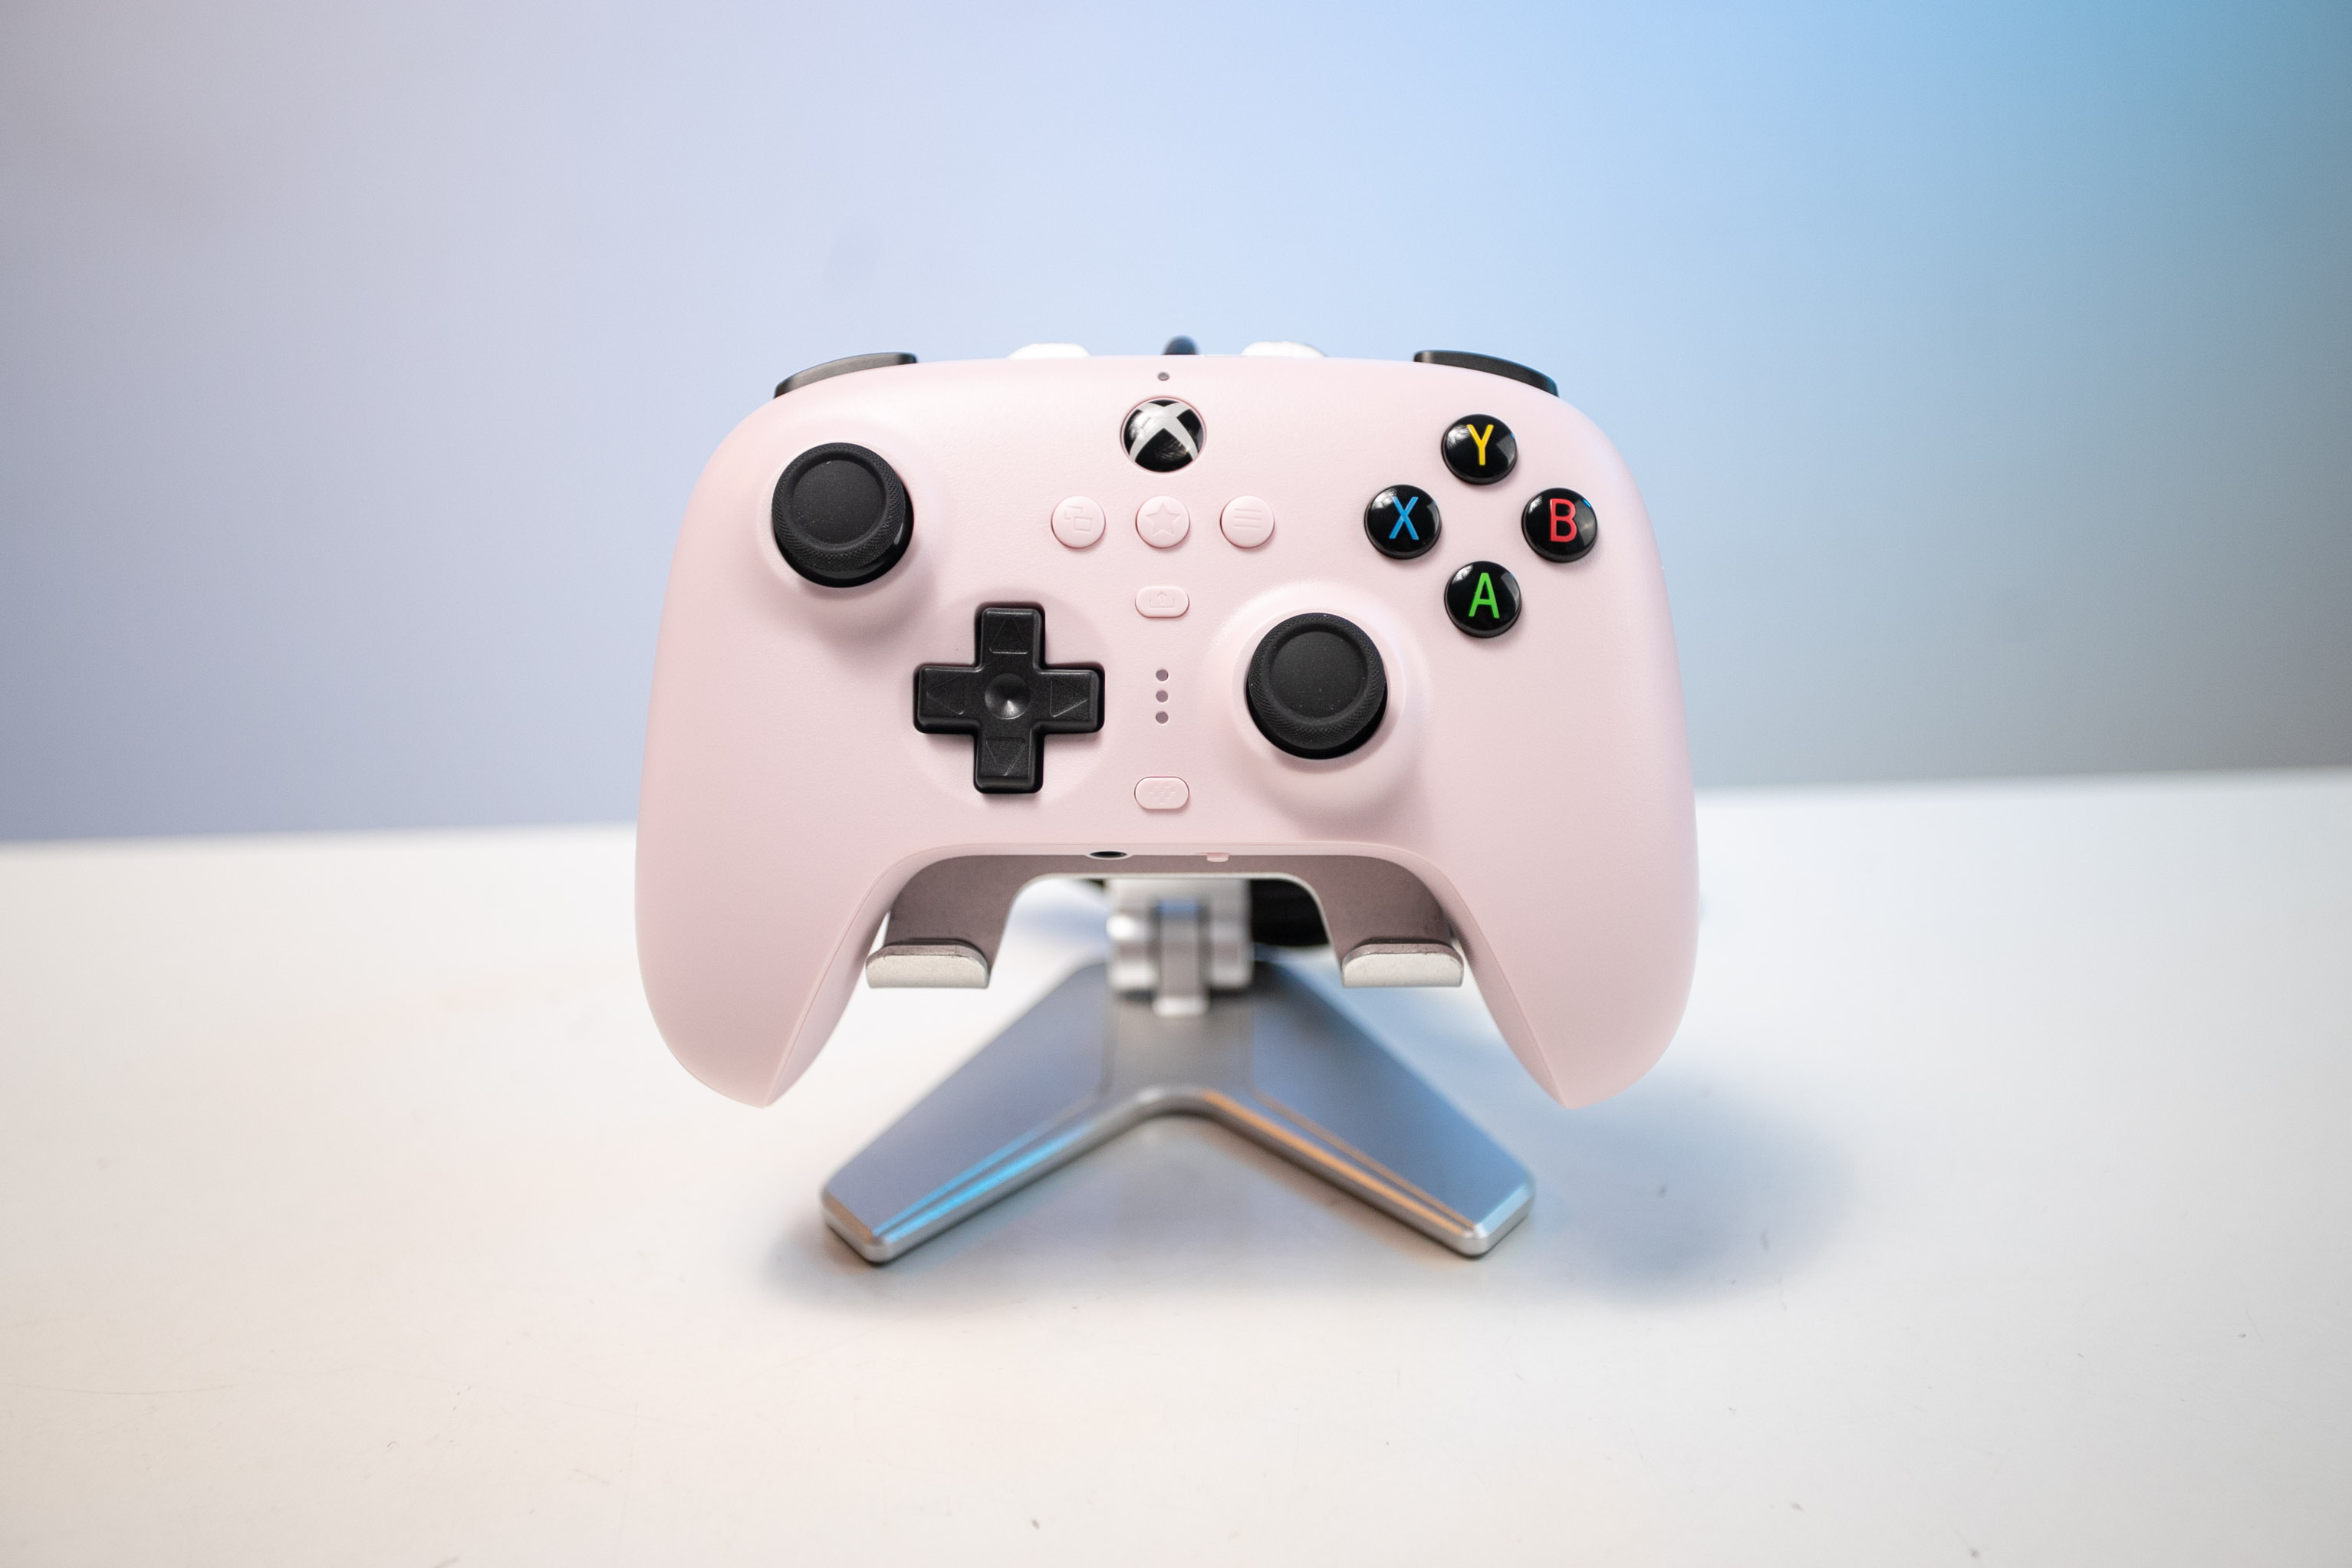 Tay cầm chơi game 8BitDo Ultimate Wired Controller cho Xbox/Windows 10/11 - màu hồng pastel